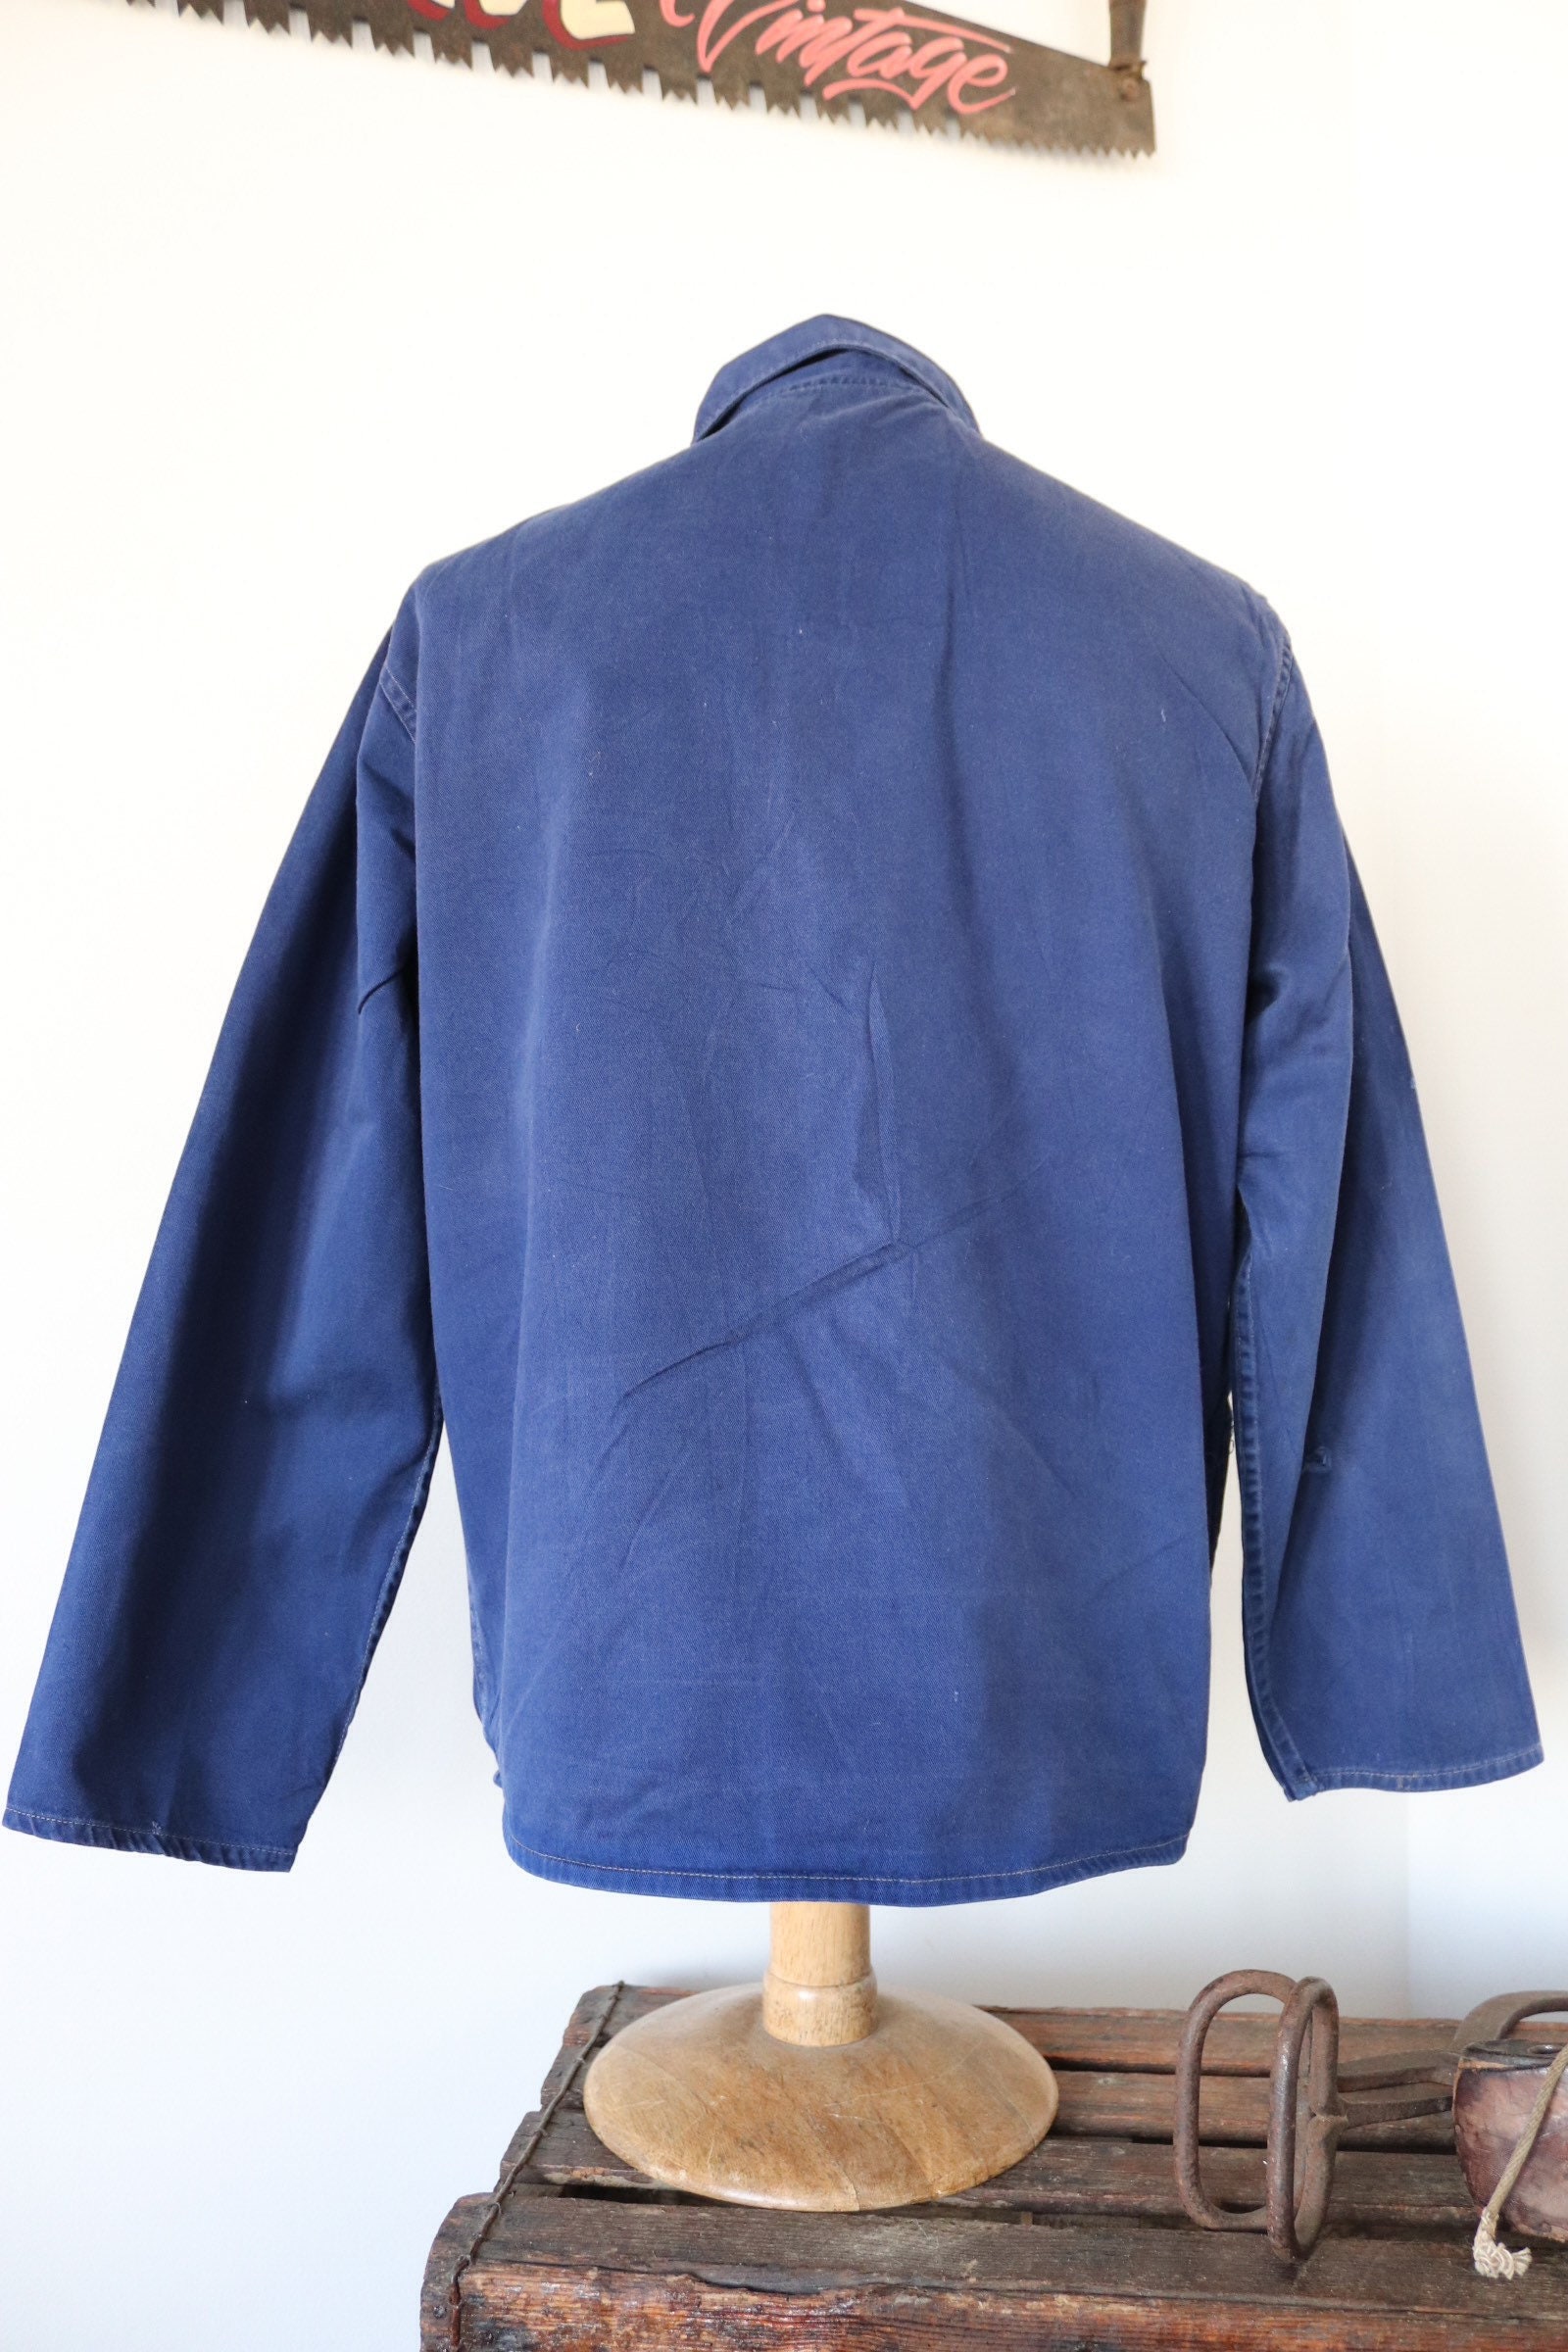 Vintage french indigo blue cotton twill work chore jacket 46 chest workwear